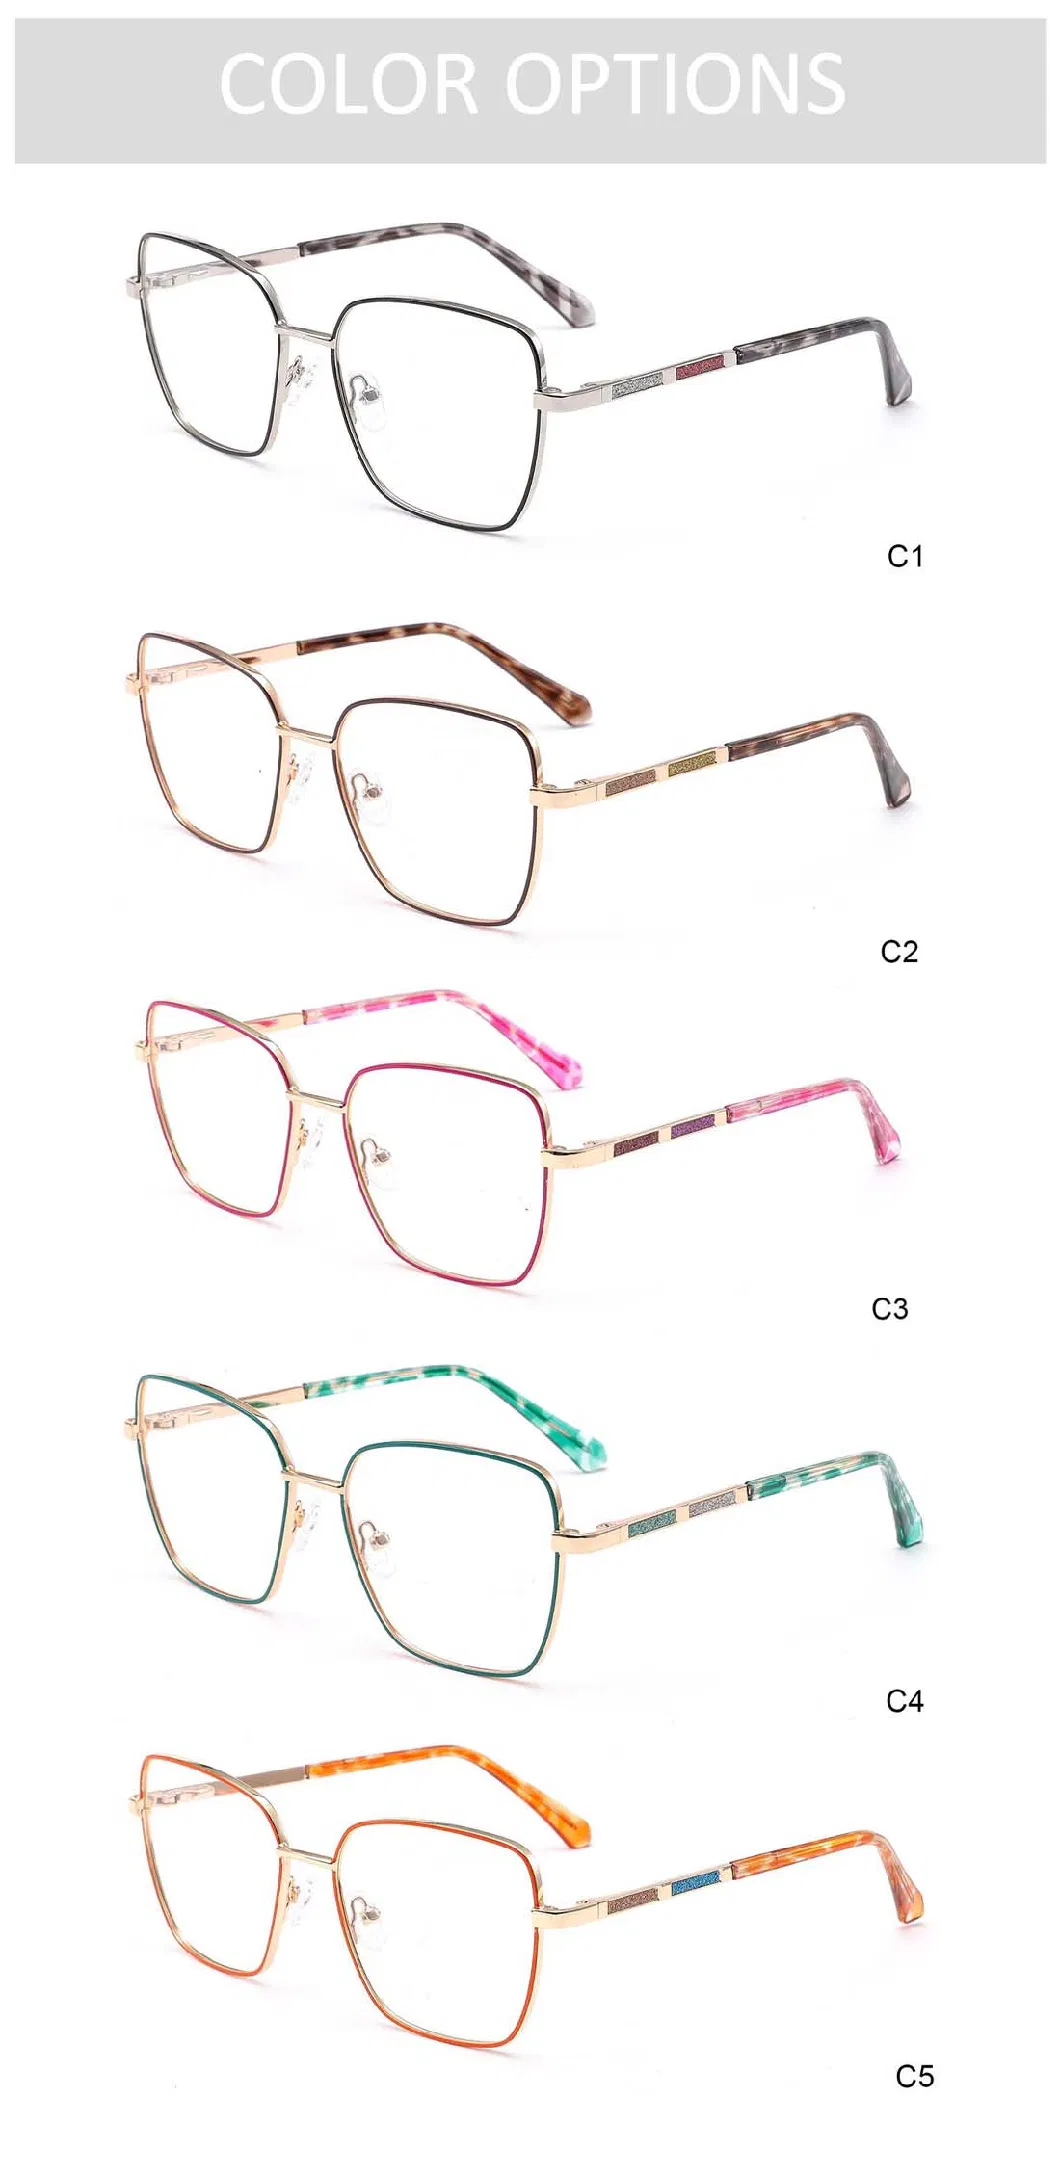 Gd China Wholesale Women Metal Shinny Stainless Optical Frames Classic Designer Spring Hinge Optical Eyeglass Frames